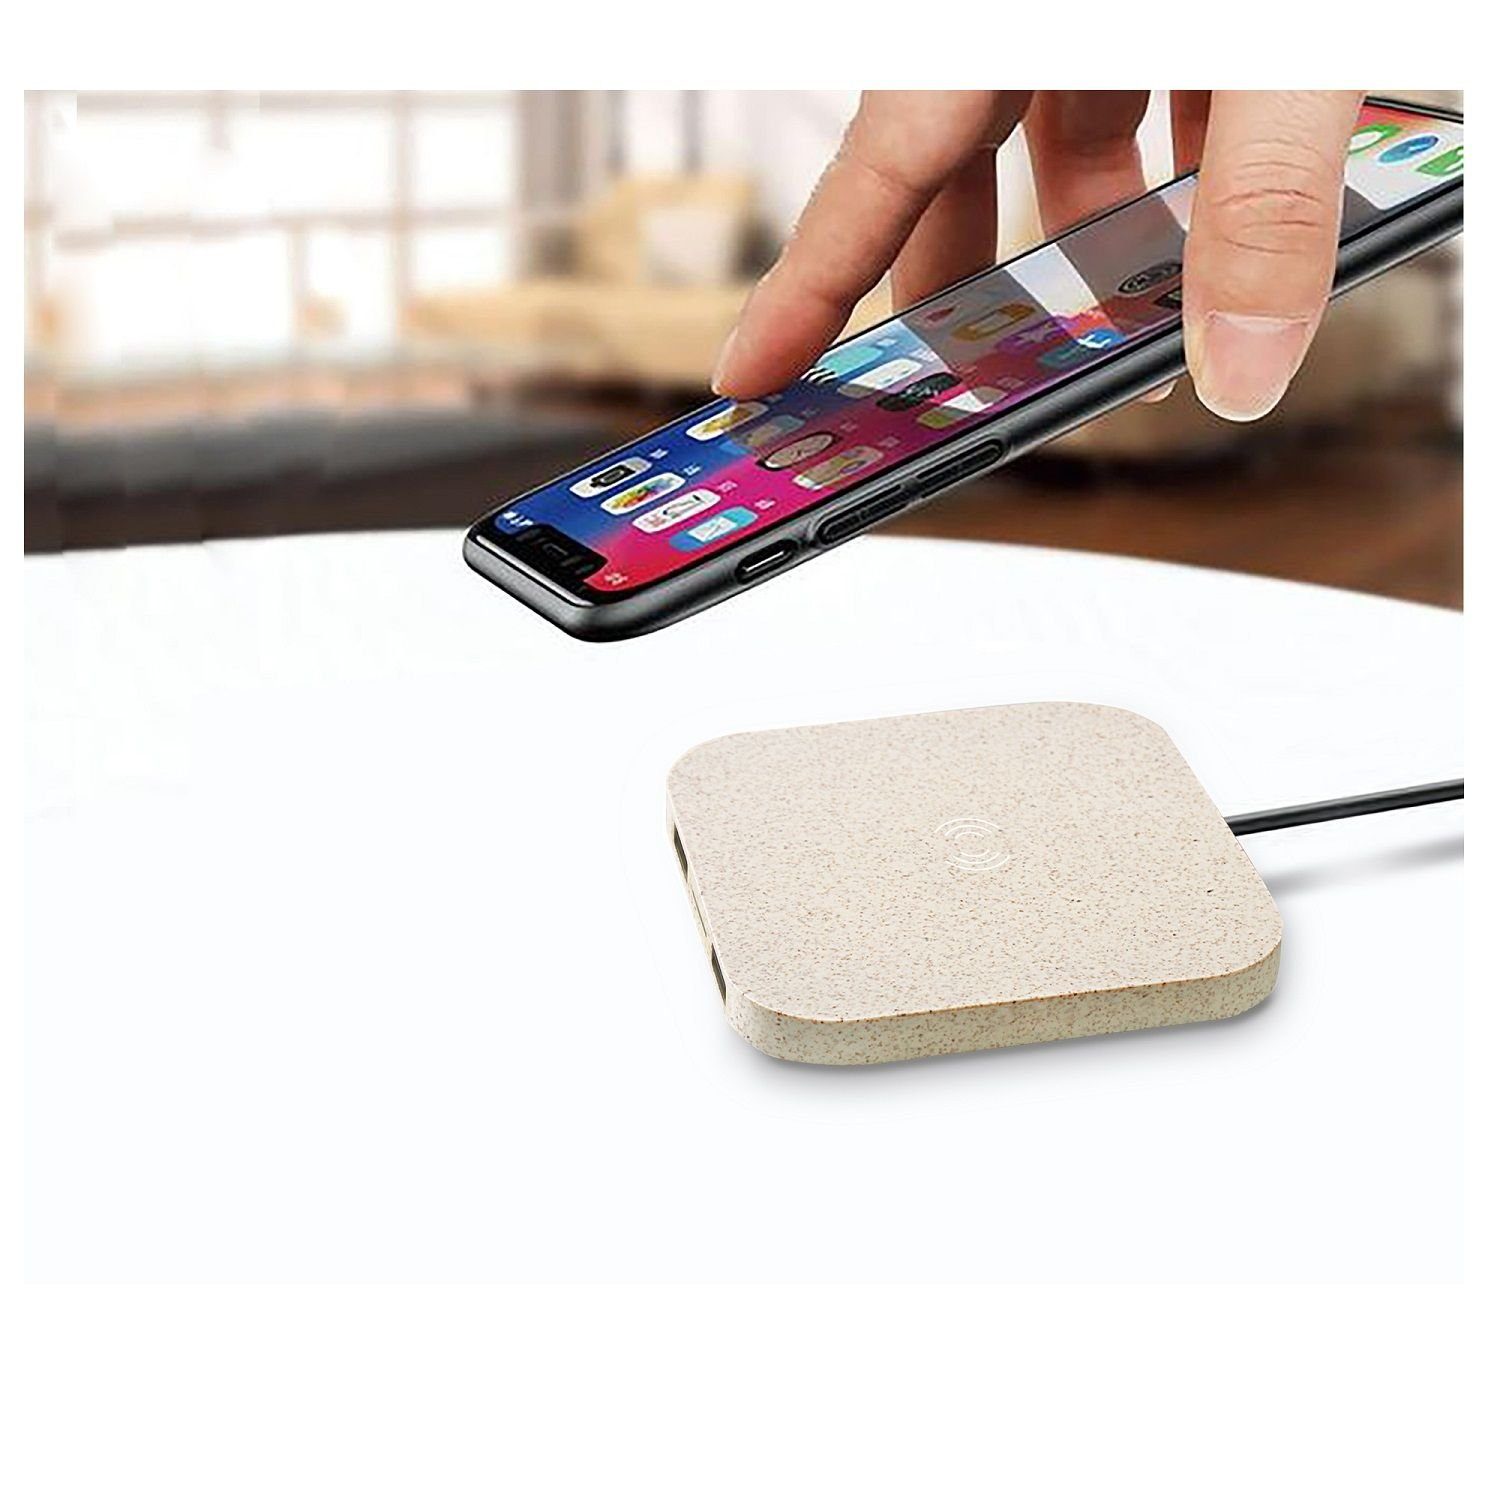 Blaupunkt BLP0232 Charger Eco-line Ultra-Slim-Design 5W Smartphone-Ladegerät wireless